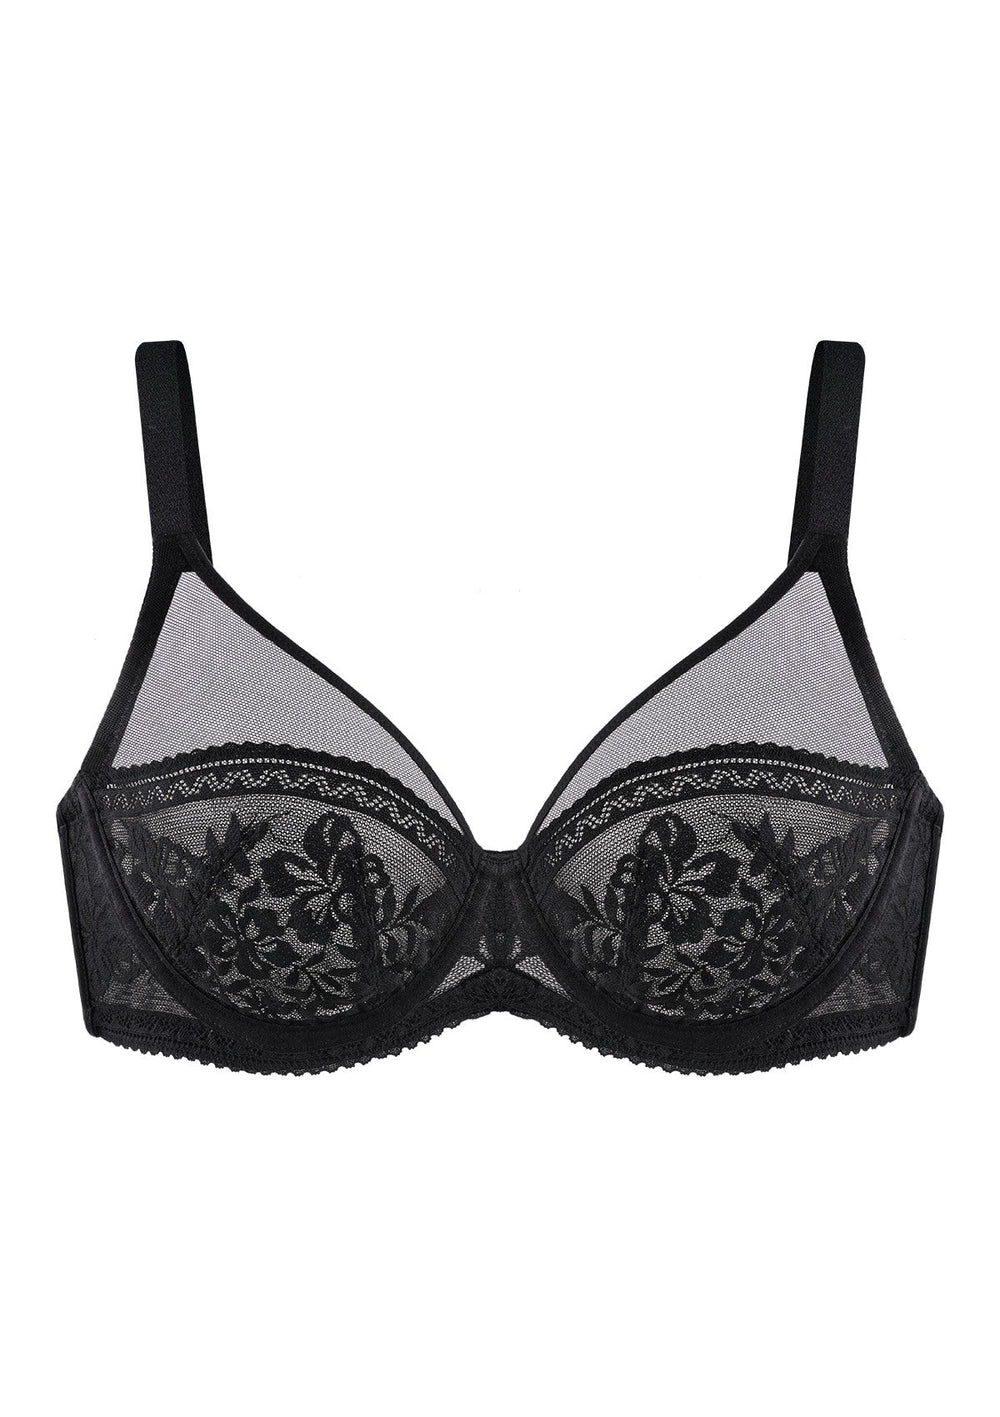 Underwire bra in black lace and tulle - ZHILYOVA Lingerie Gerda